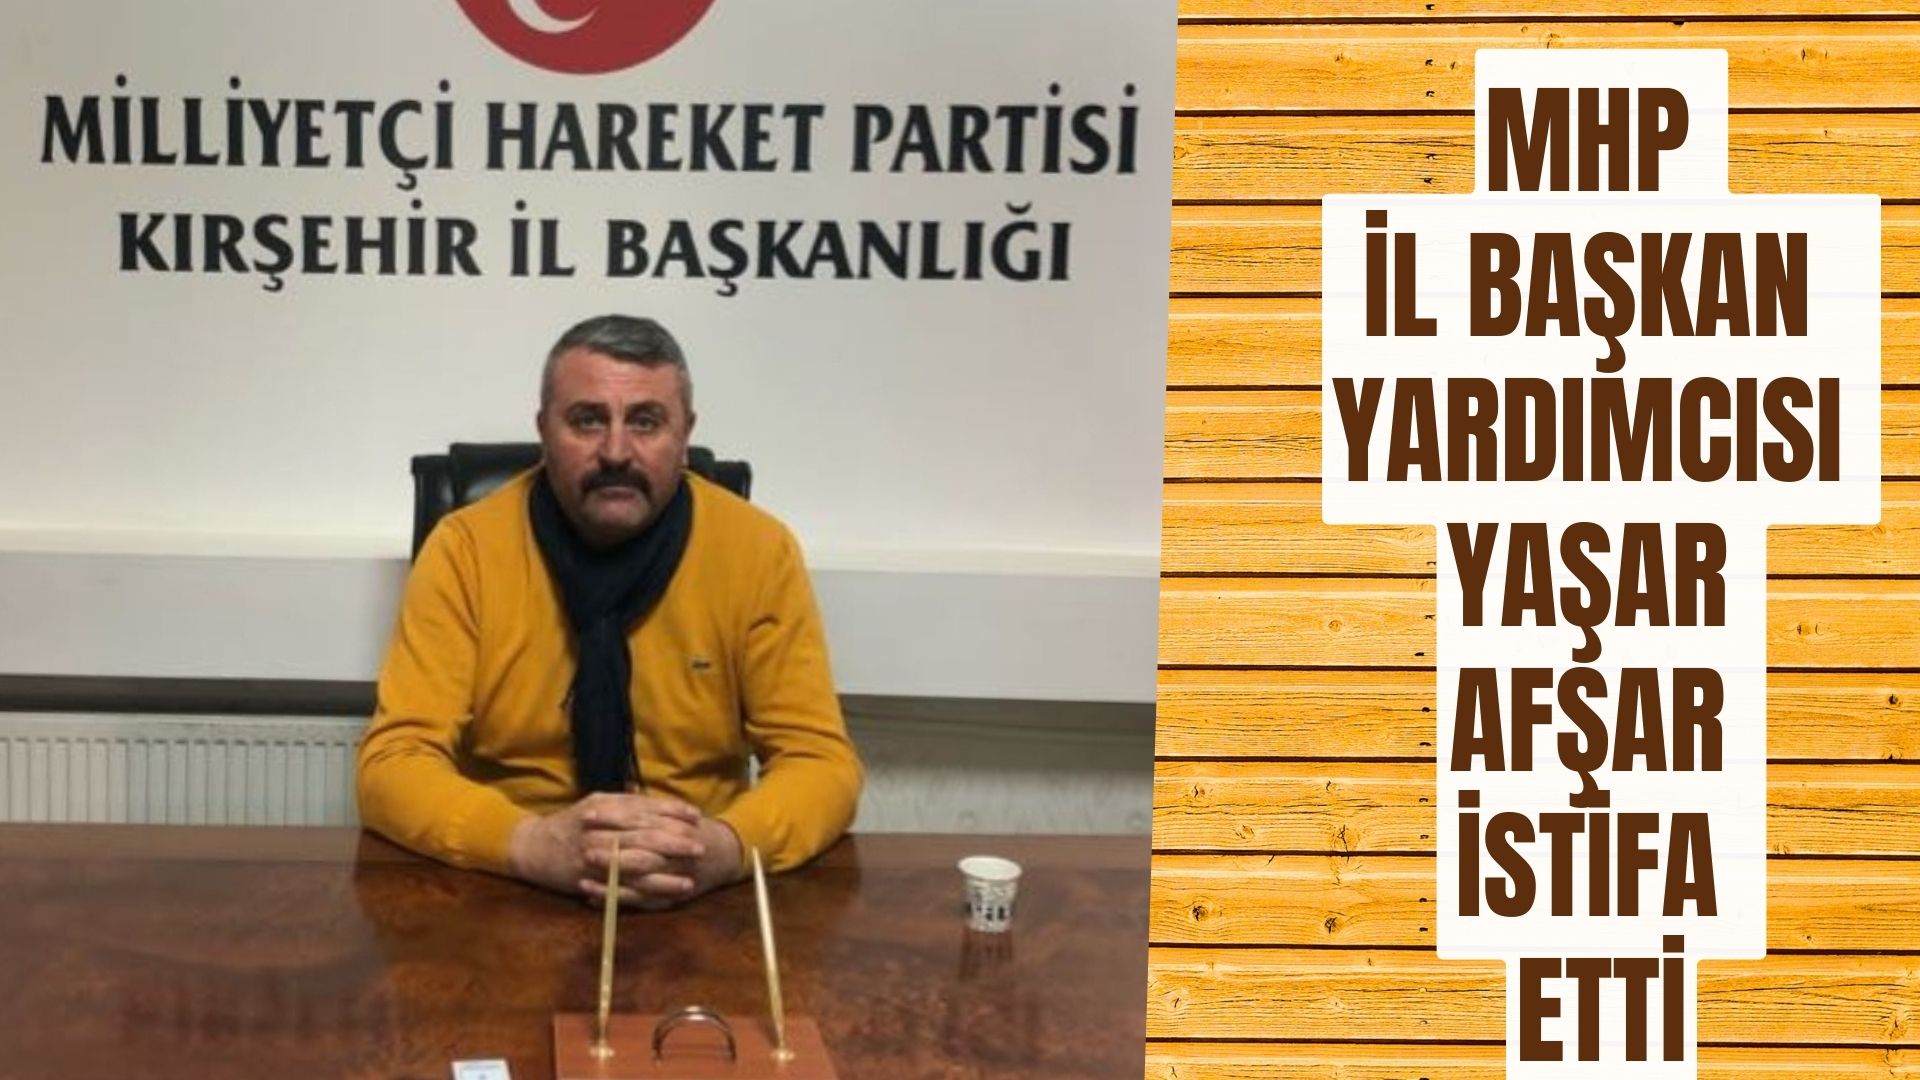 MHP İl Başkan Yardımcısı Afşar istifa etti